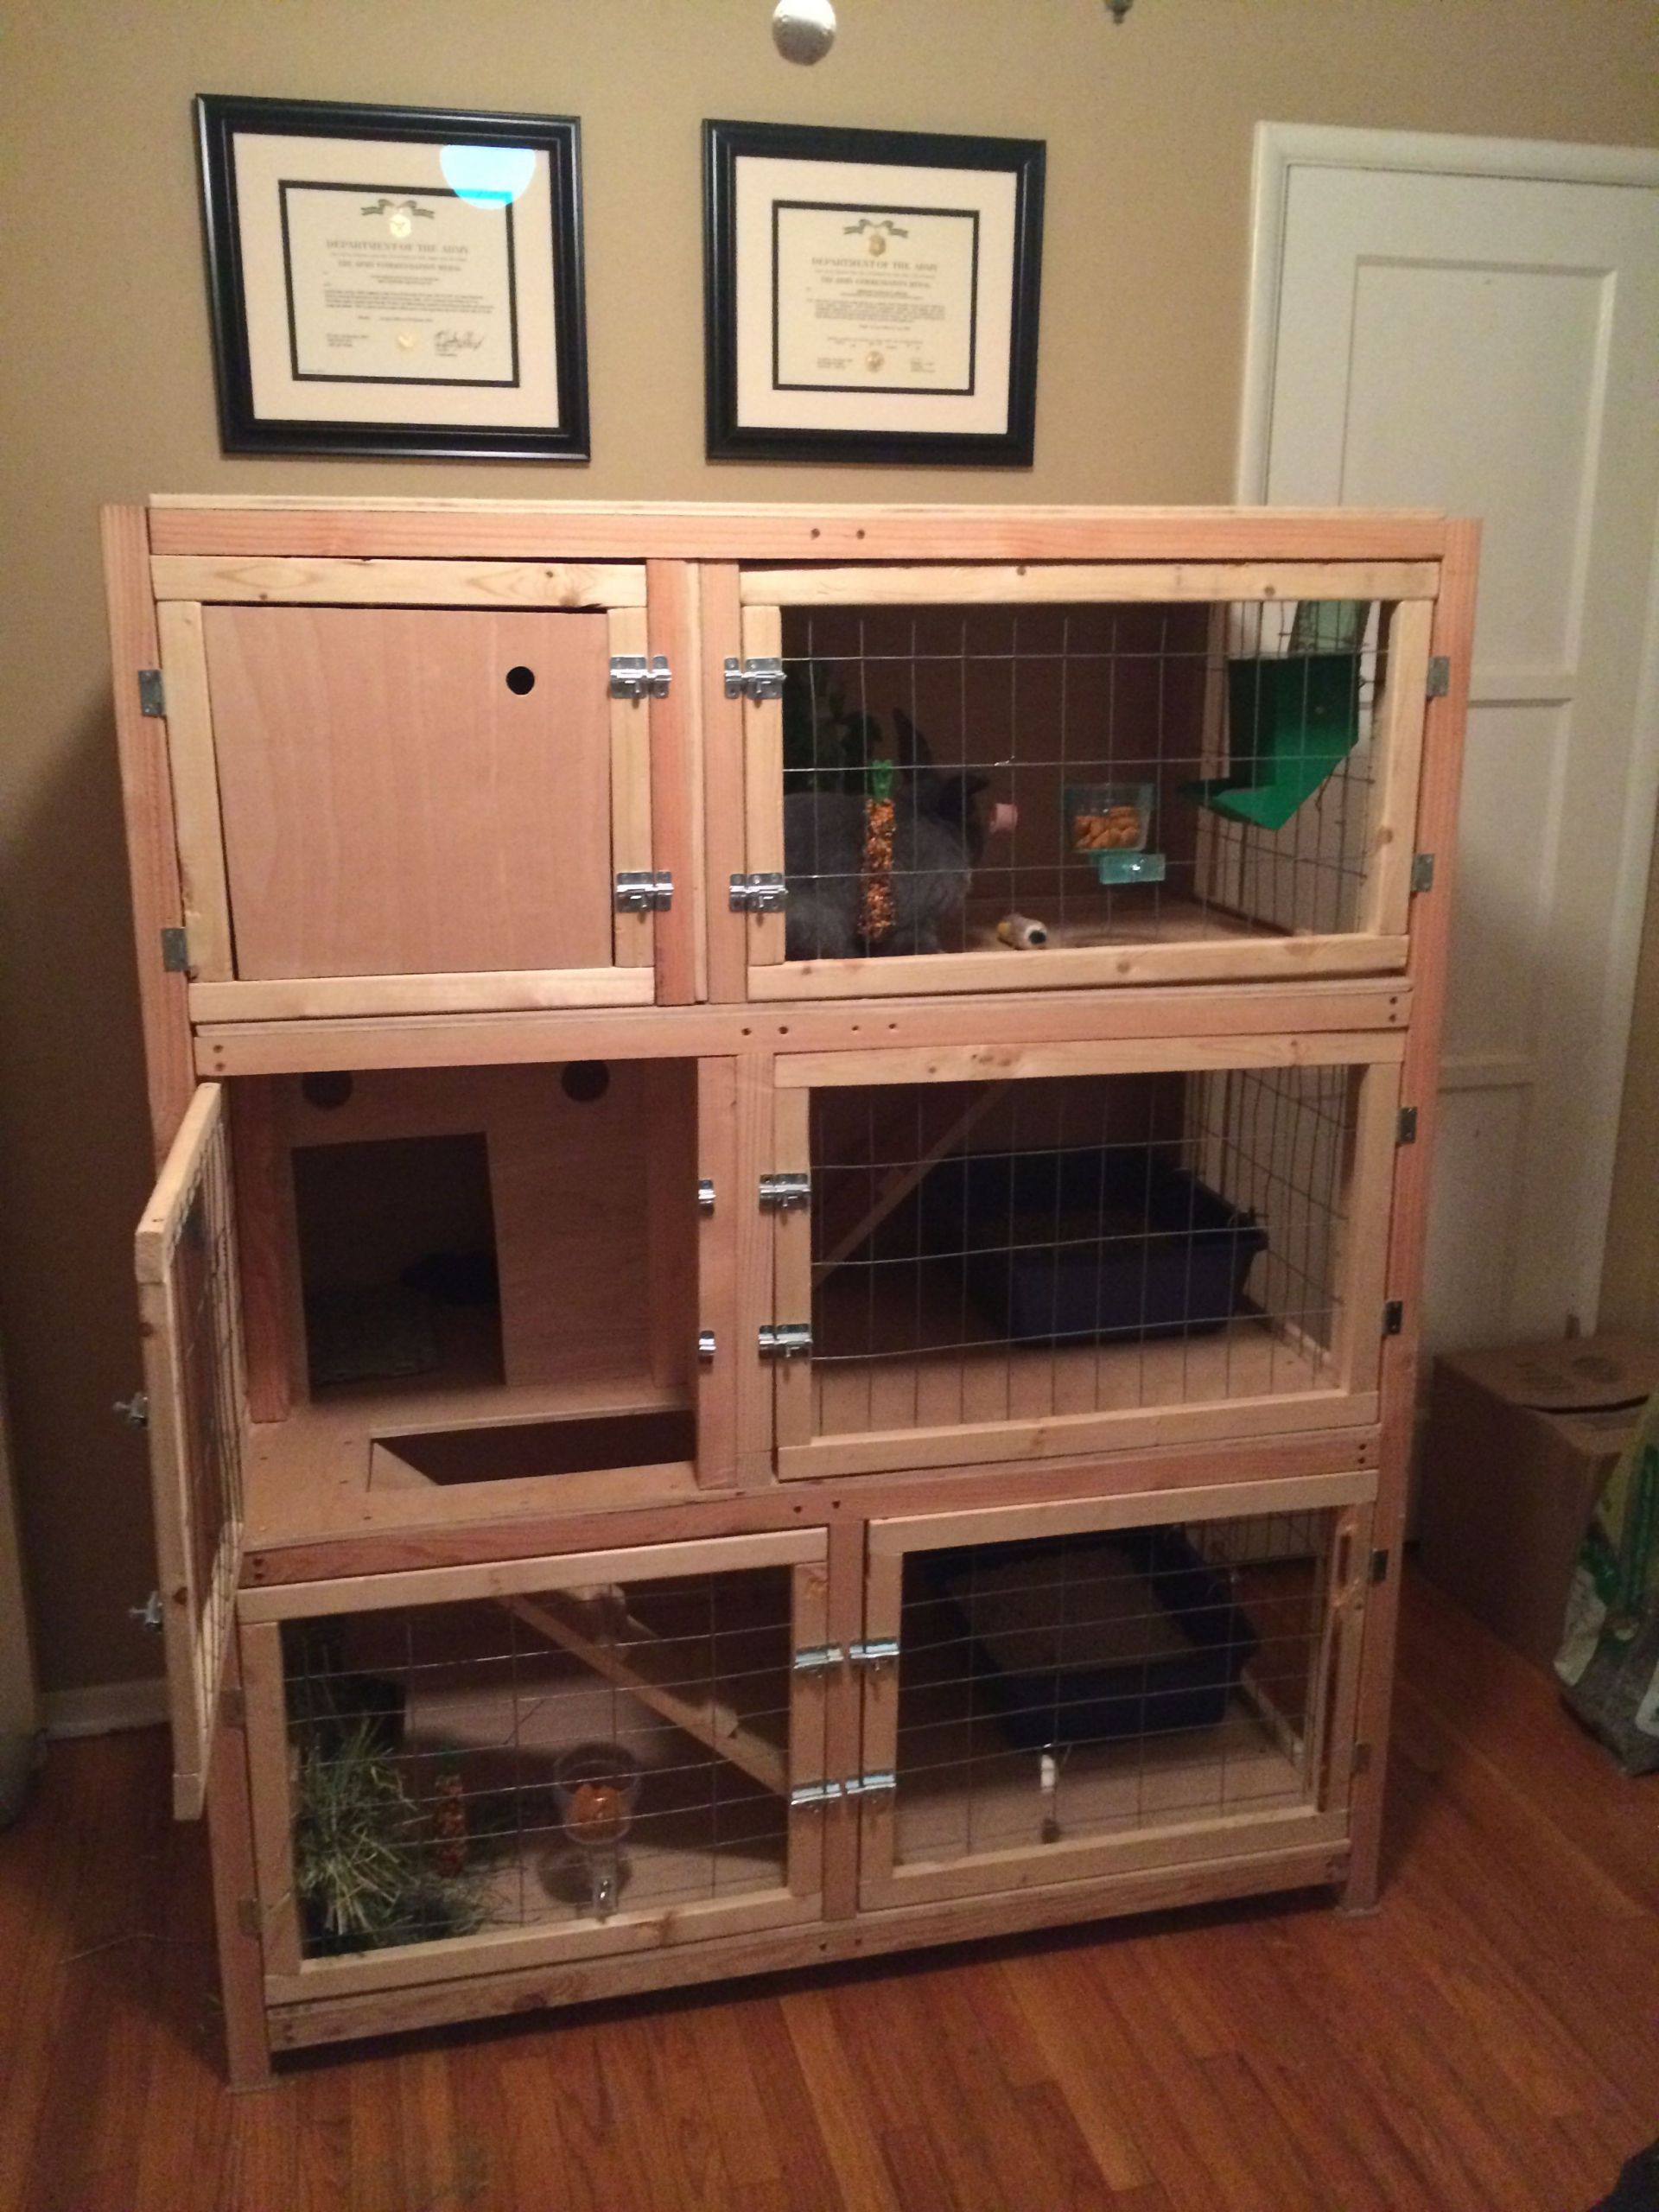 DIY Guinea Pig Cage Plans
 Amazing Woodworking Plans